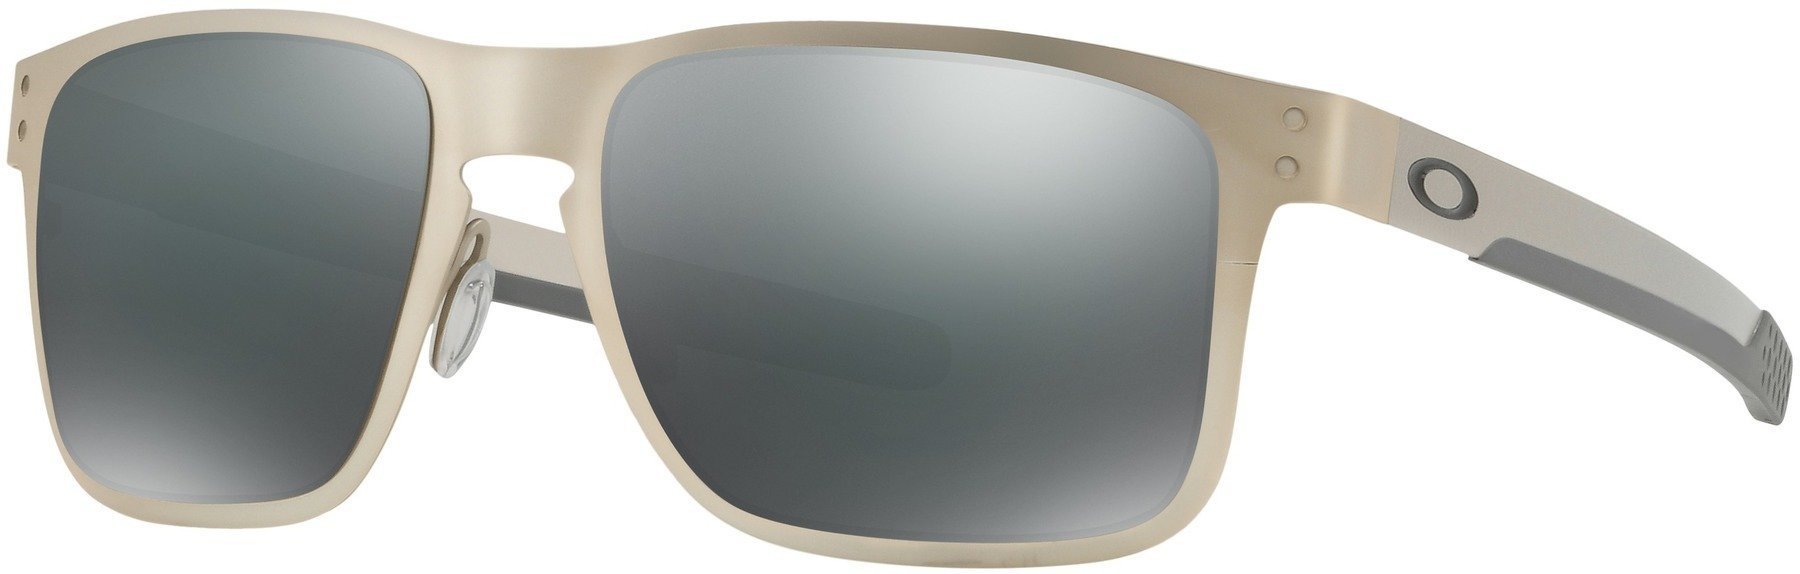 Lifestyle Glasses Oakley Holbrook Metal Satin Chrome / Black Iridium